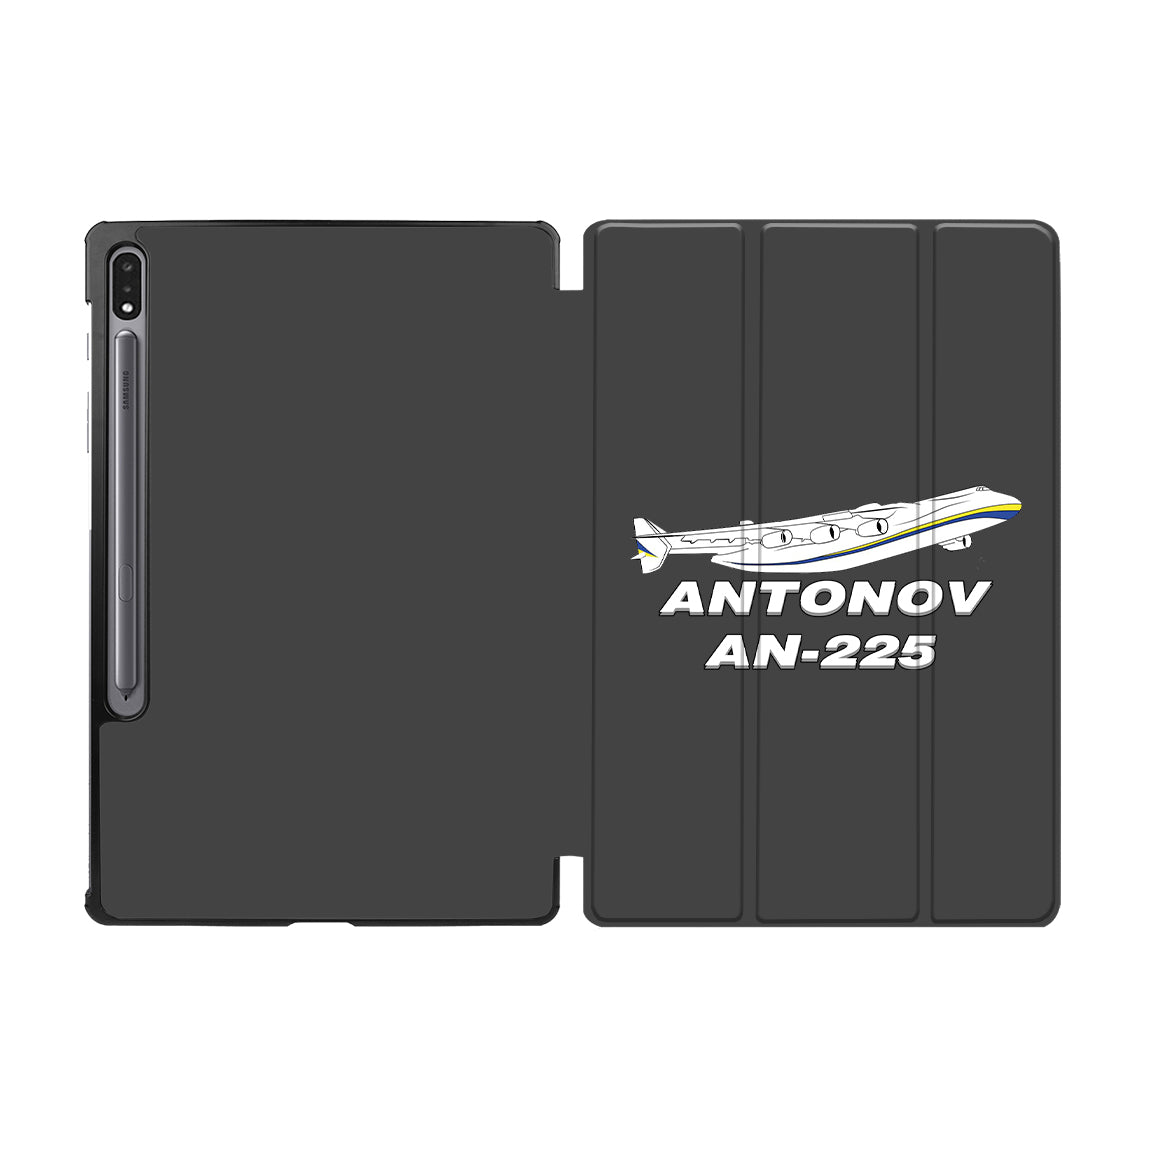 Antonov AN-225 (27) Designed Samsung Tablet Cases